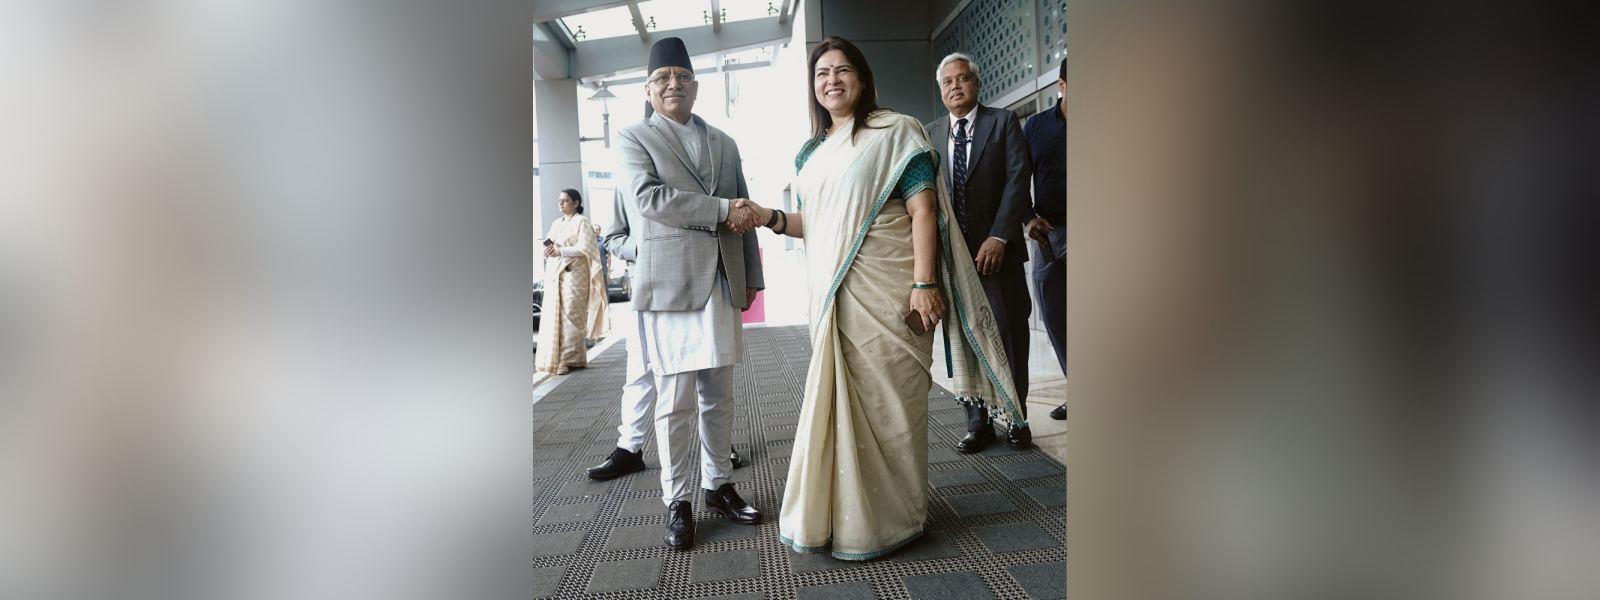 Prime Minister of Nepal, H.E. Mr. Pushpa Kamal Dahal ‘Prachanda’ arrived in New Delhi on a visit, welcomed by Minister of State for External Affairs Smt Meenakashi Lekhi